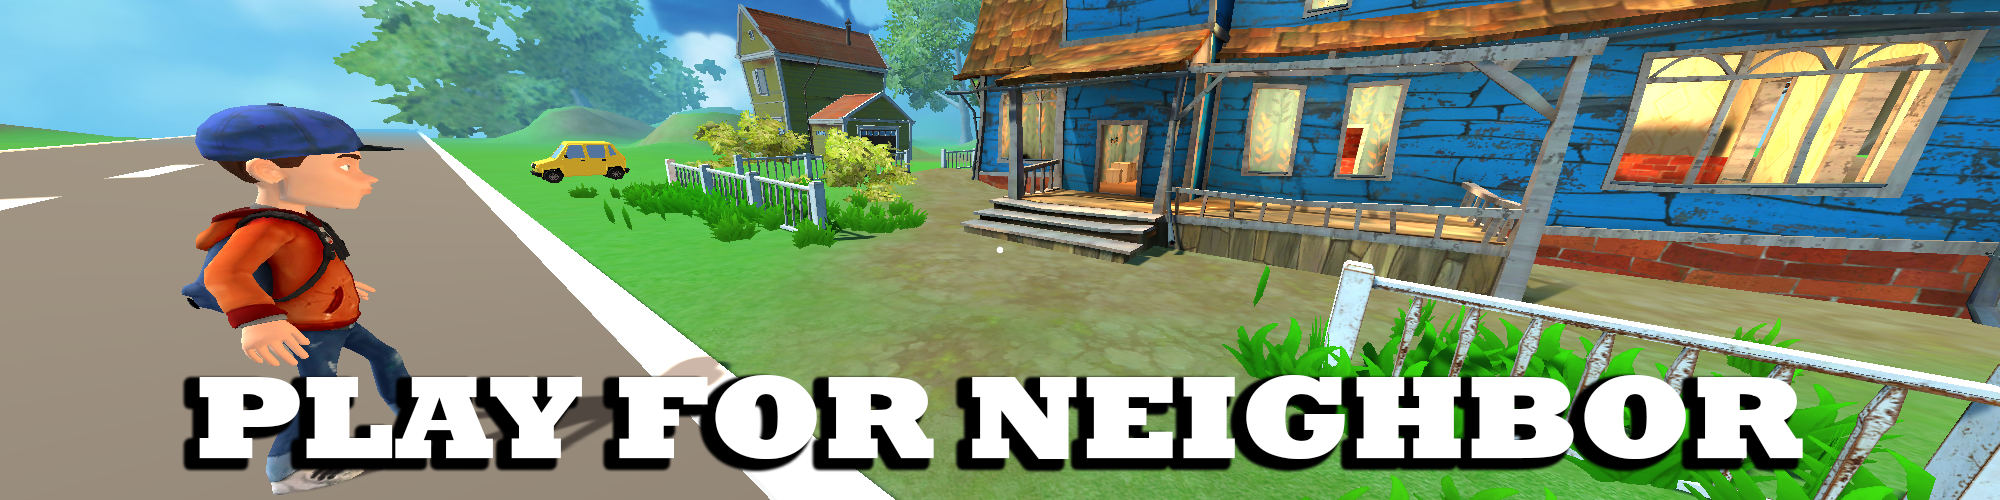 Play for Neighbor